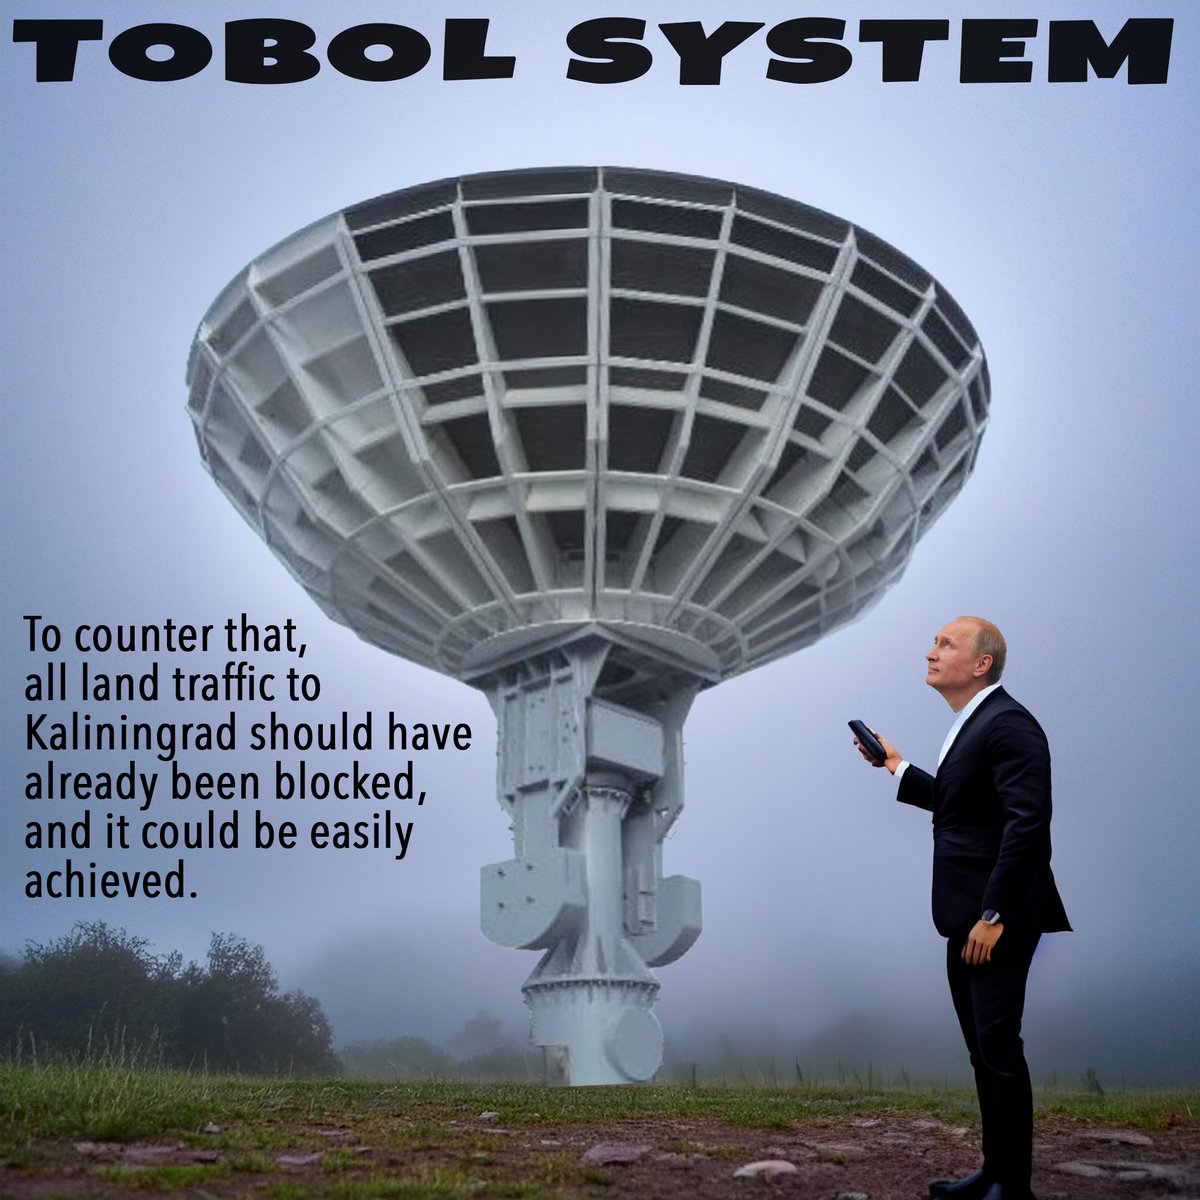 The Tobol System in Russian Kaliningrad Jams GPS Over Europe, as Putin uses Kaliningrad as a base for terrorizing civilian EU aviation.